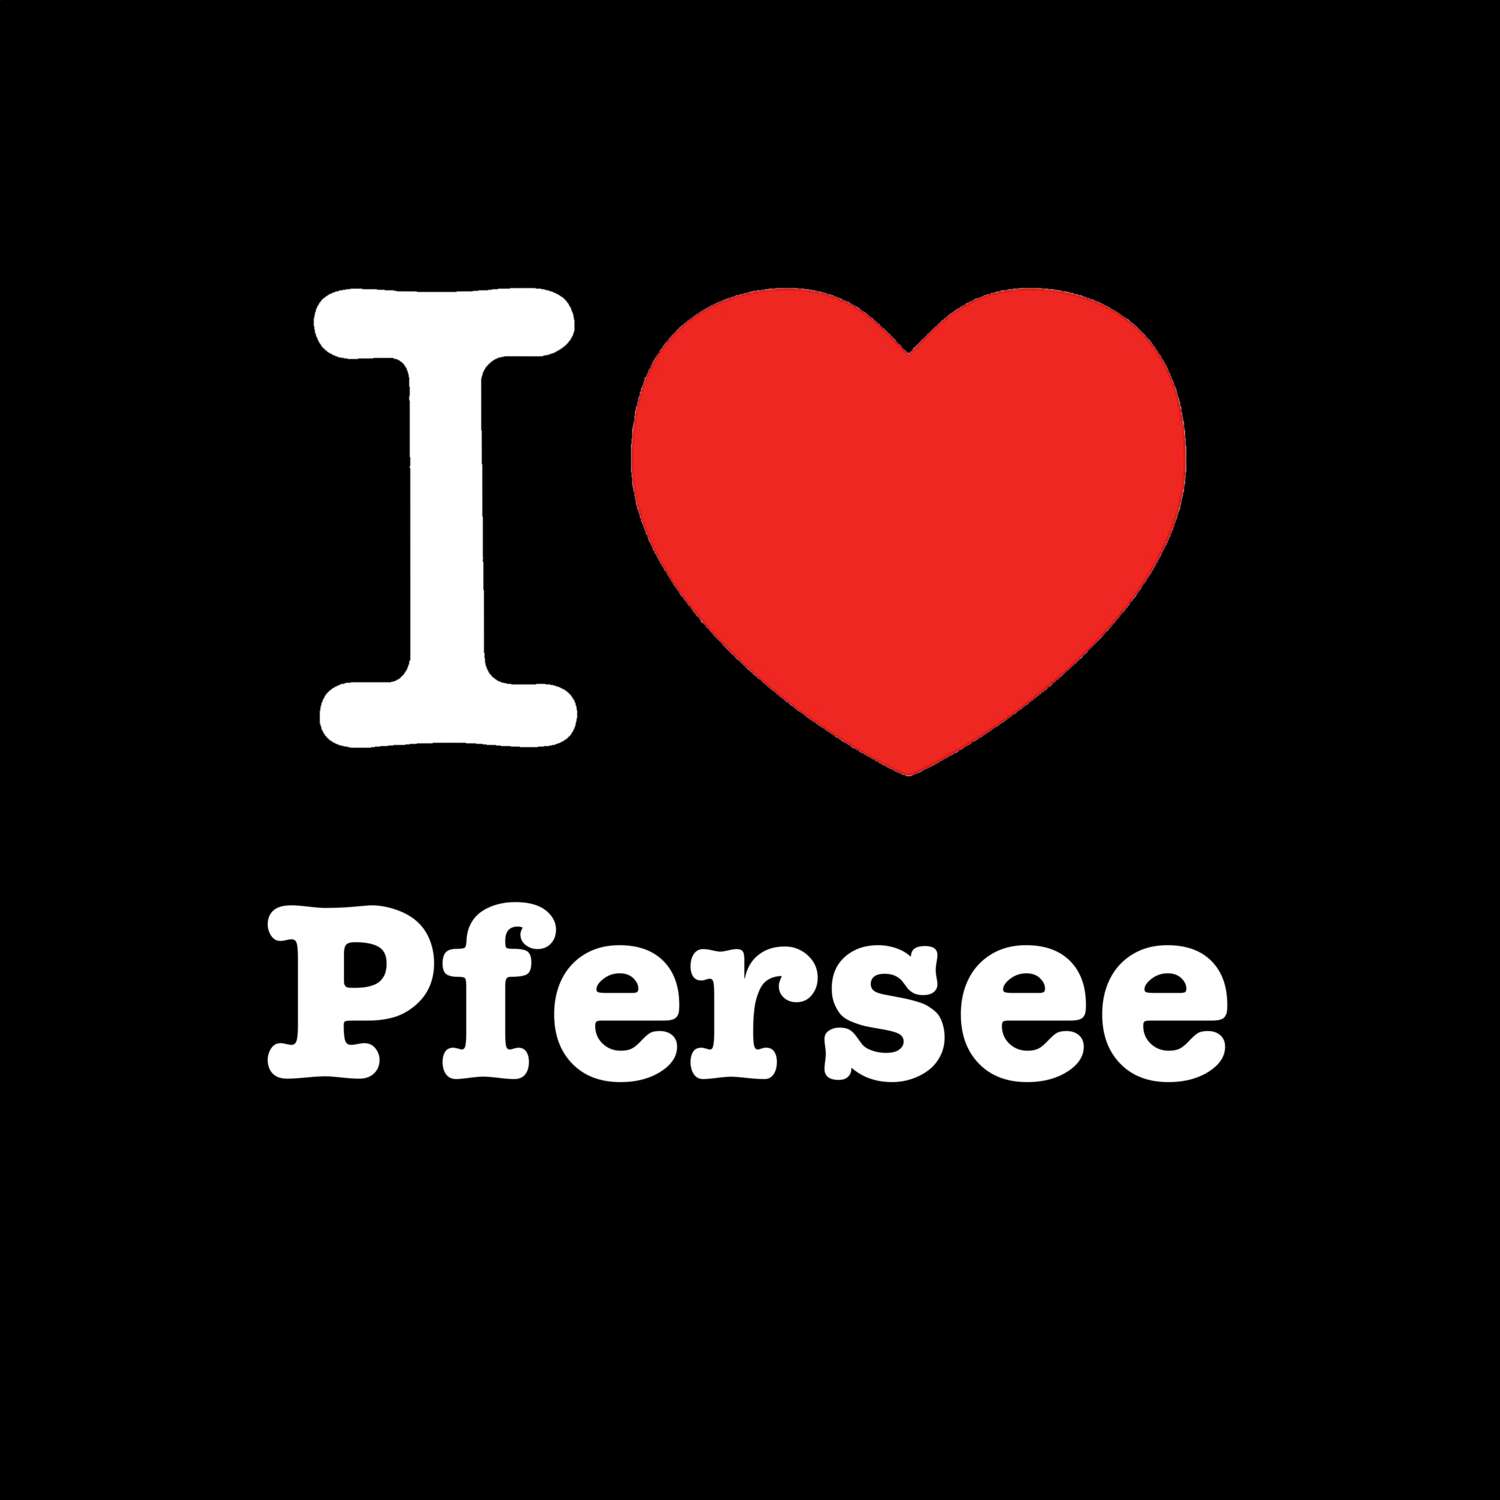 Pfersee T-Shirt »I love«